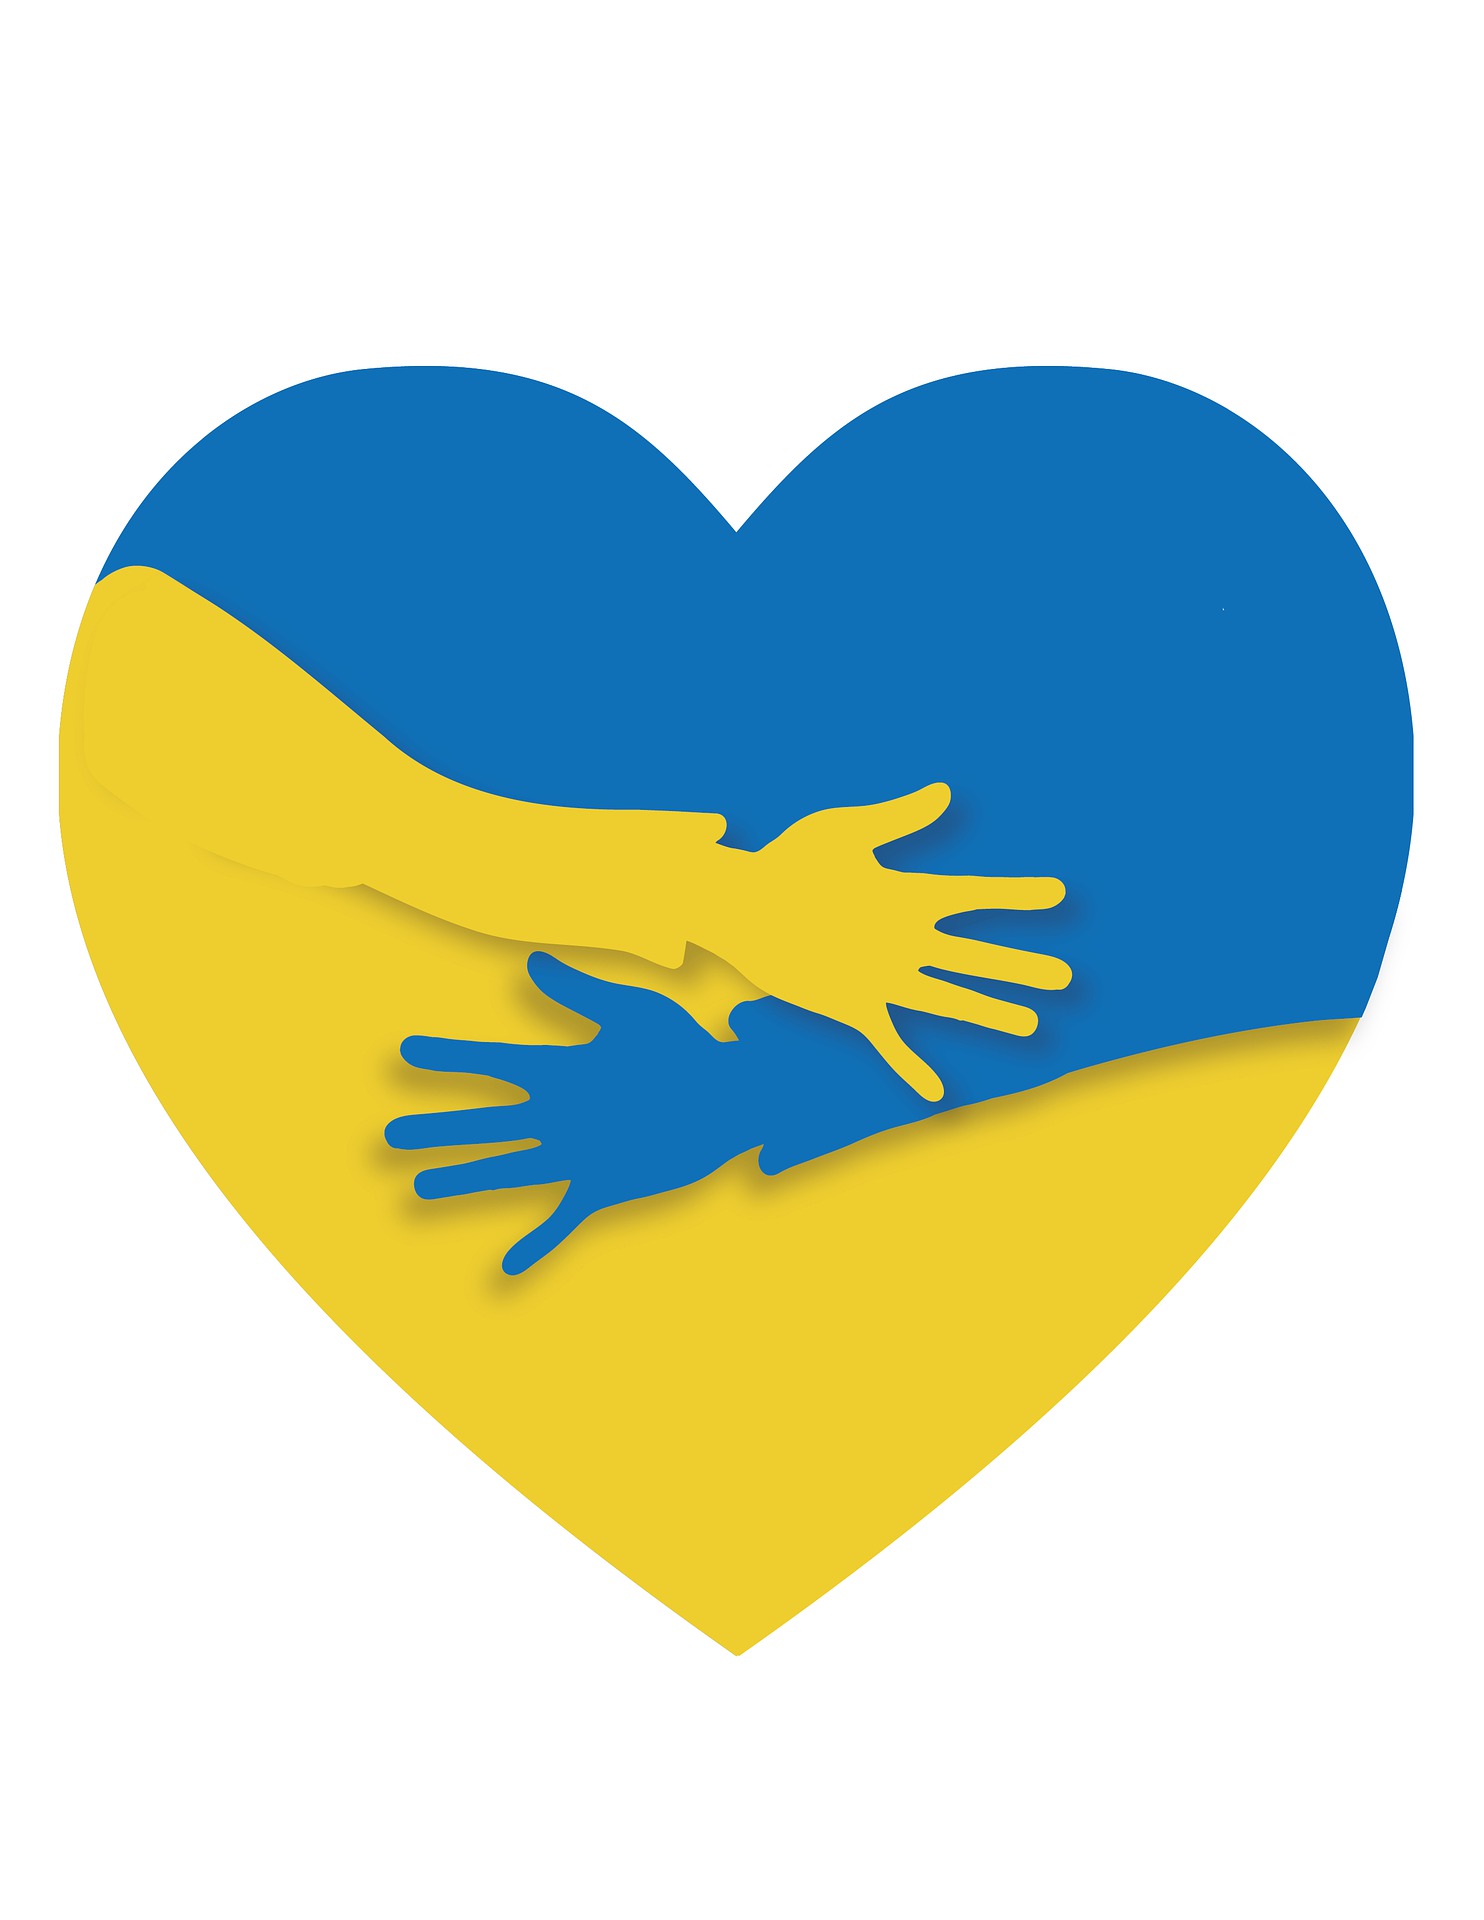 ukraine (c) Alexandra Koch in pixabay